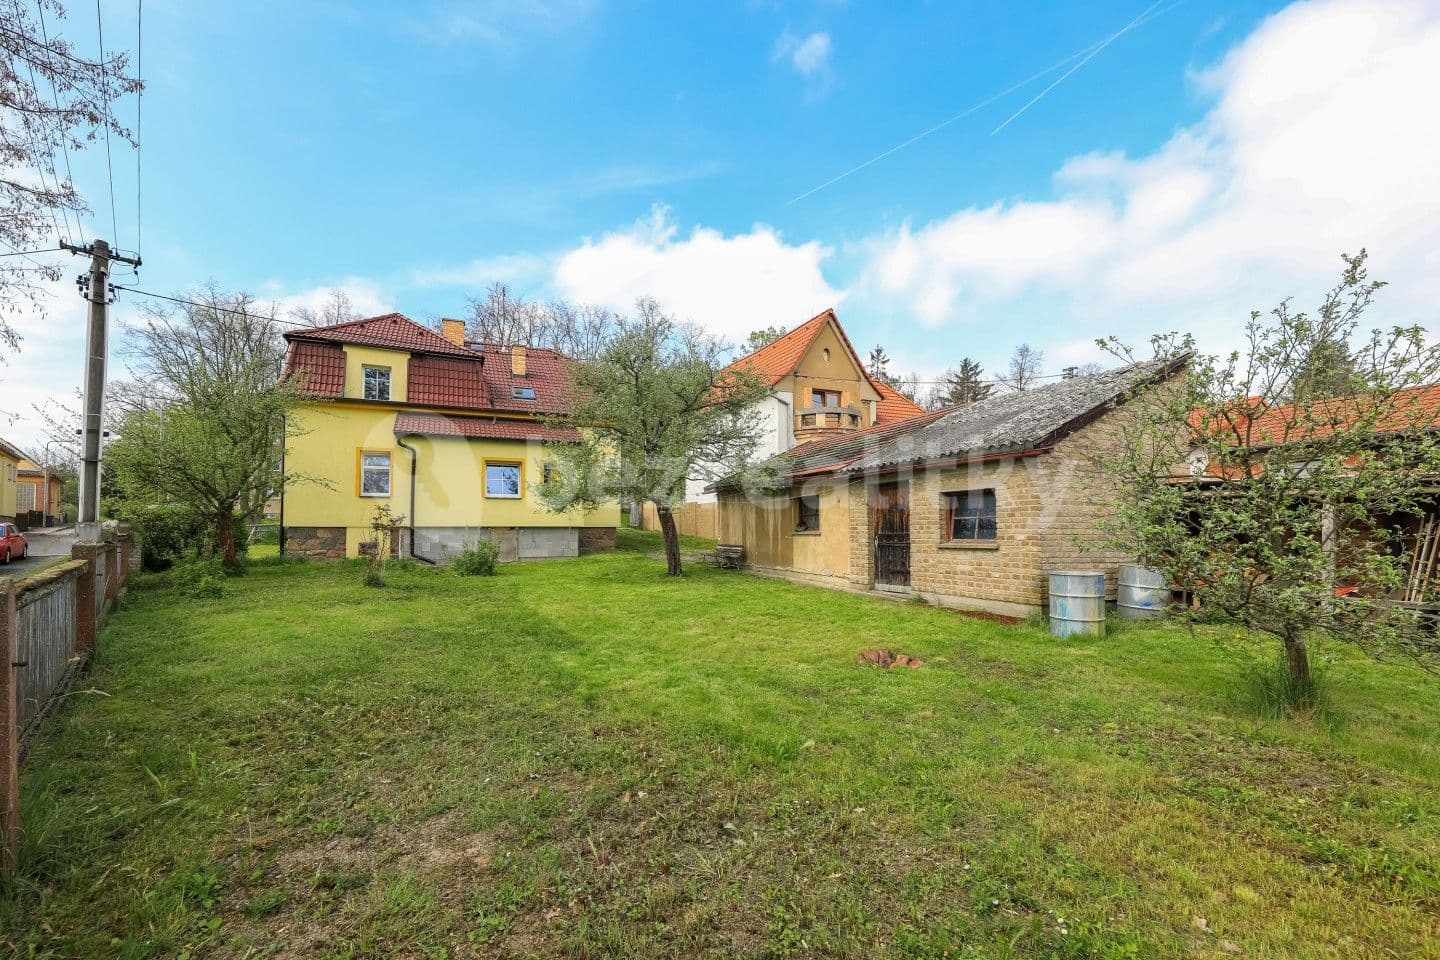 house for sale, 180 m², Sady ČSA, Kralovice, Plzeňský Region